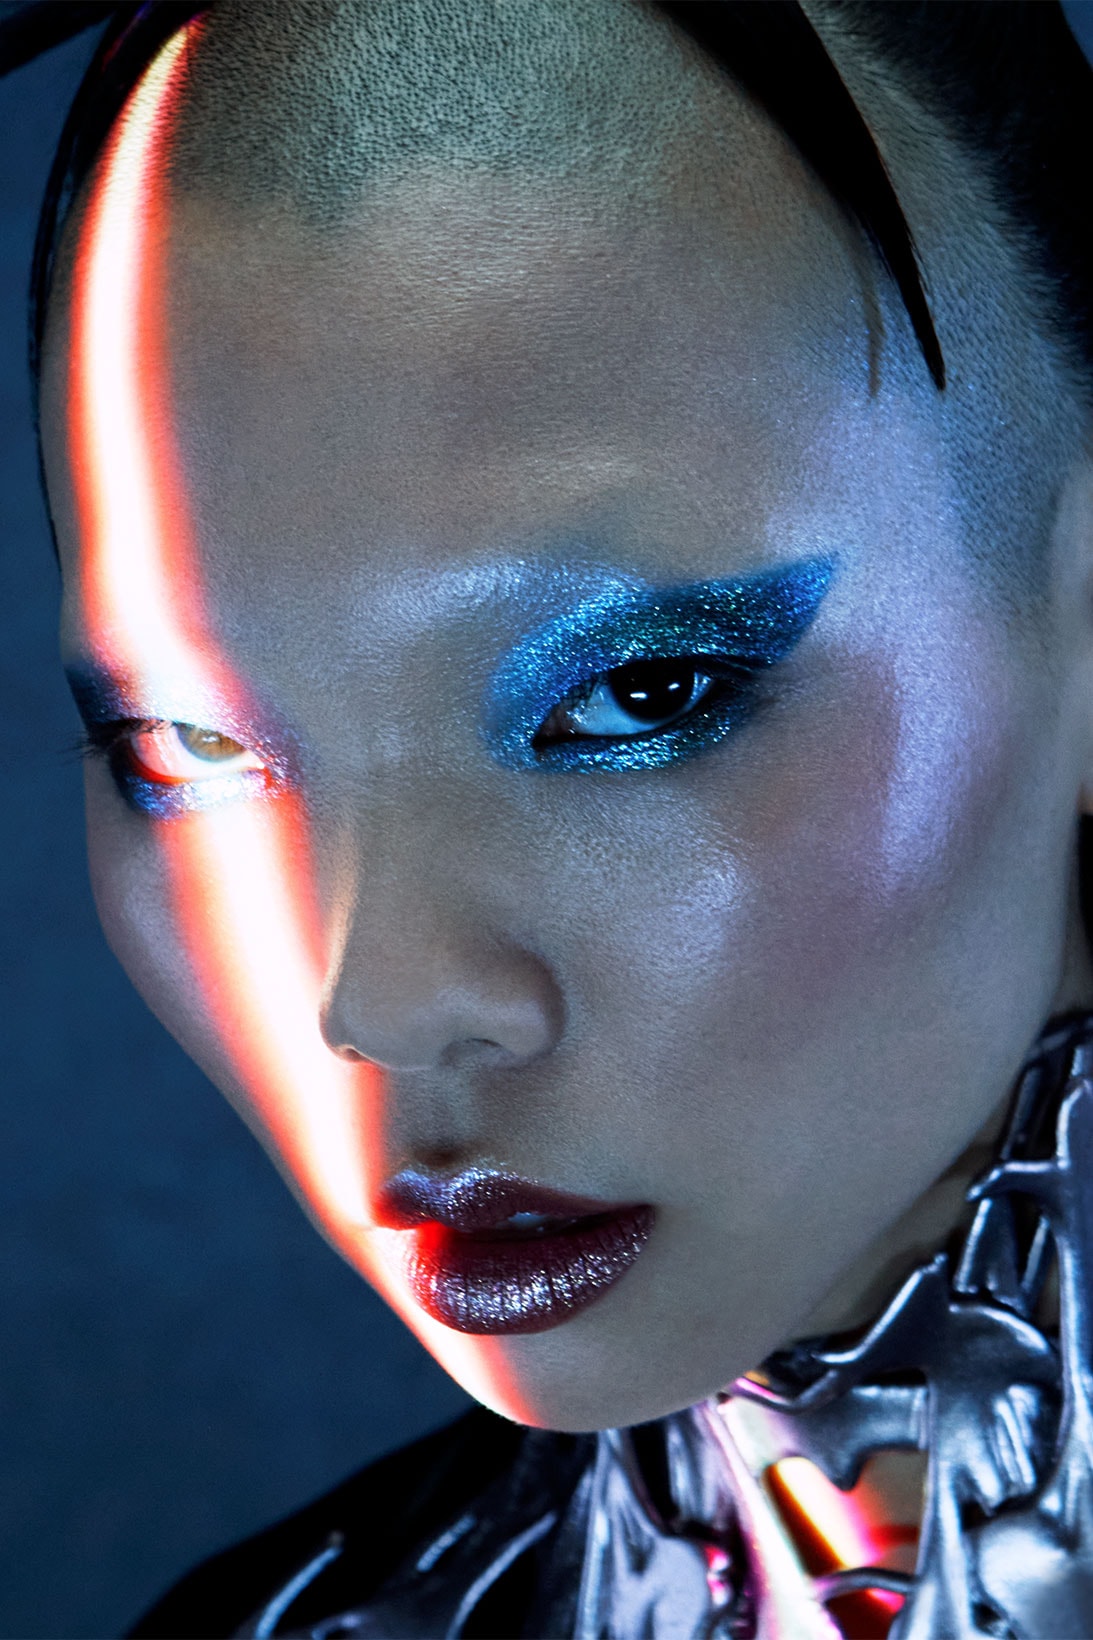 Halsey Announces about-face Makeup Line – Billboard